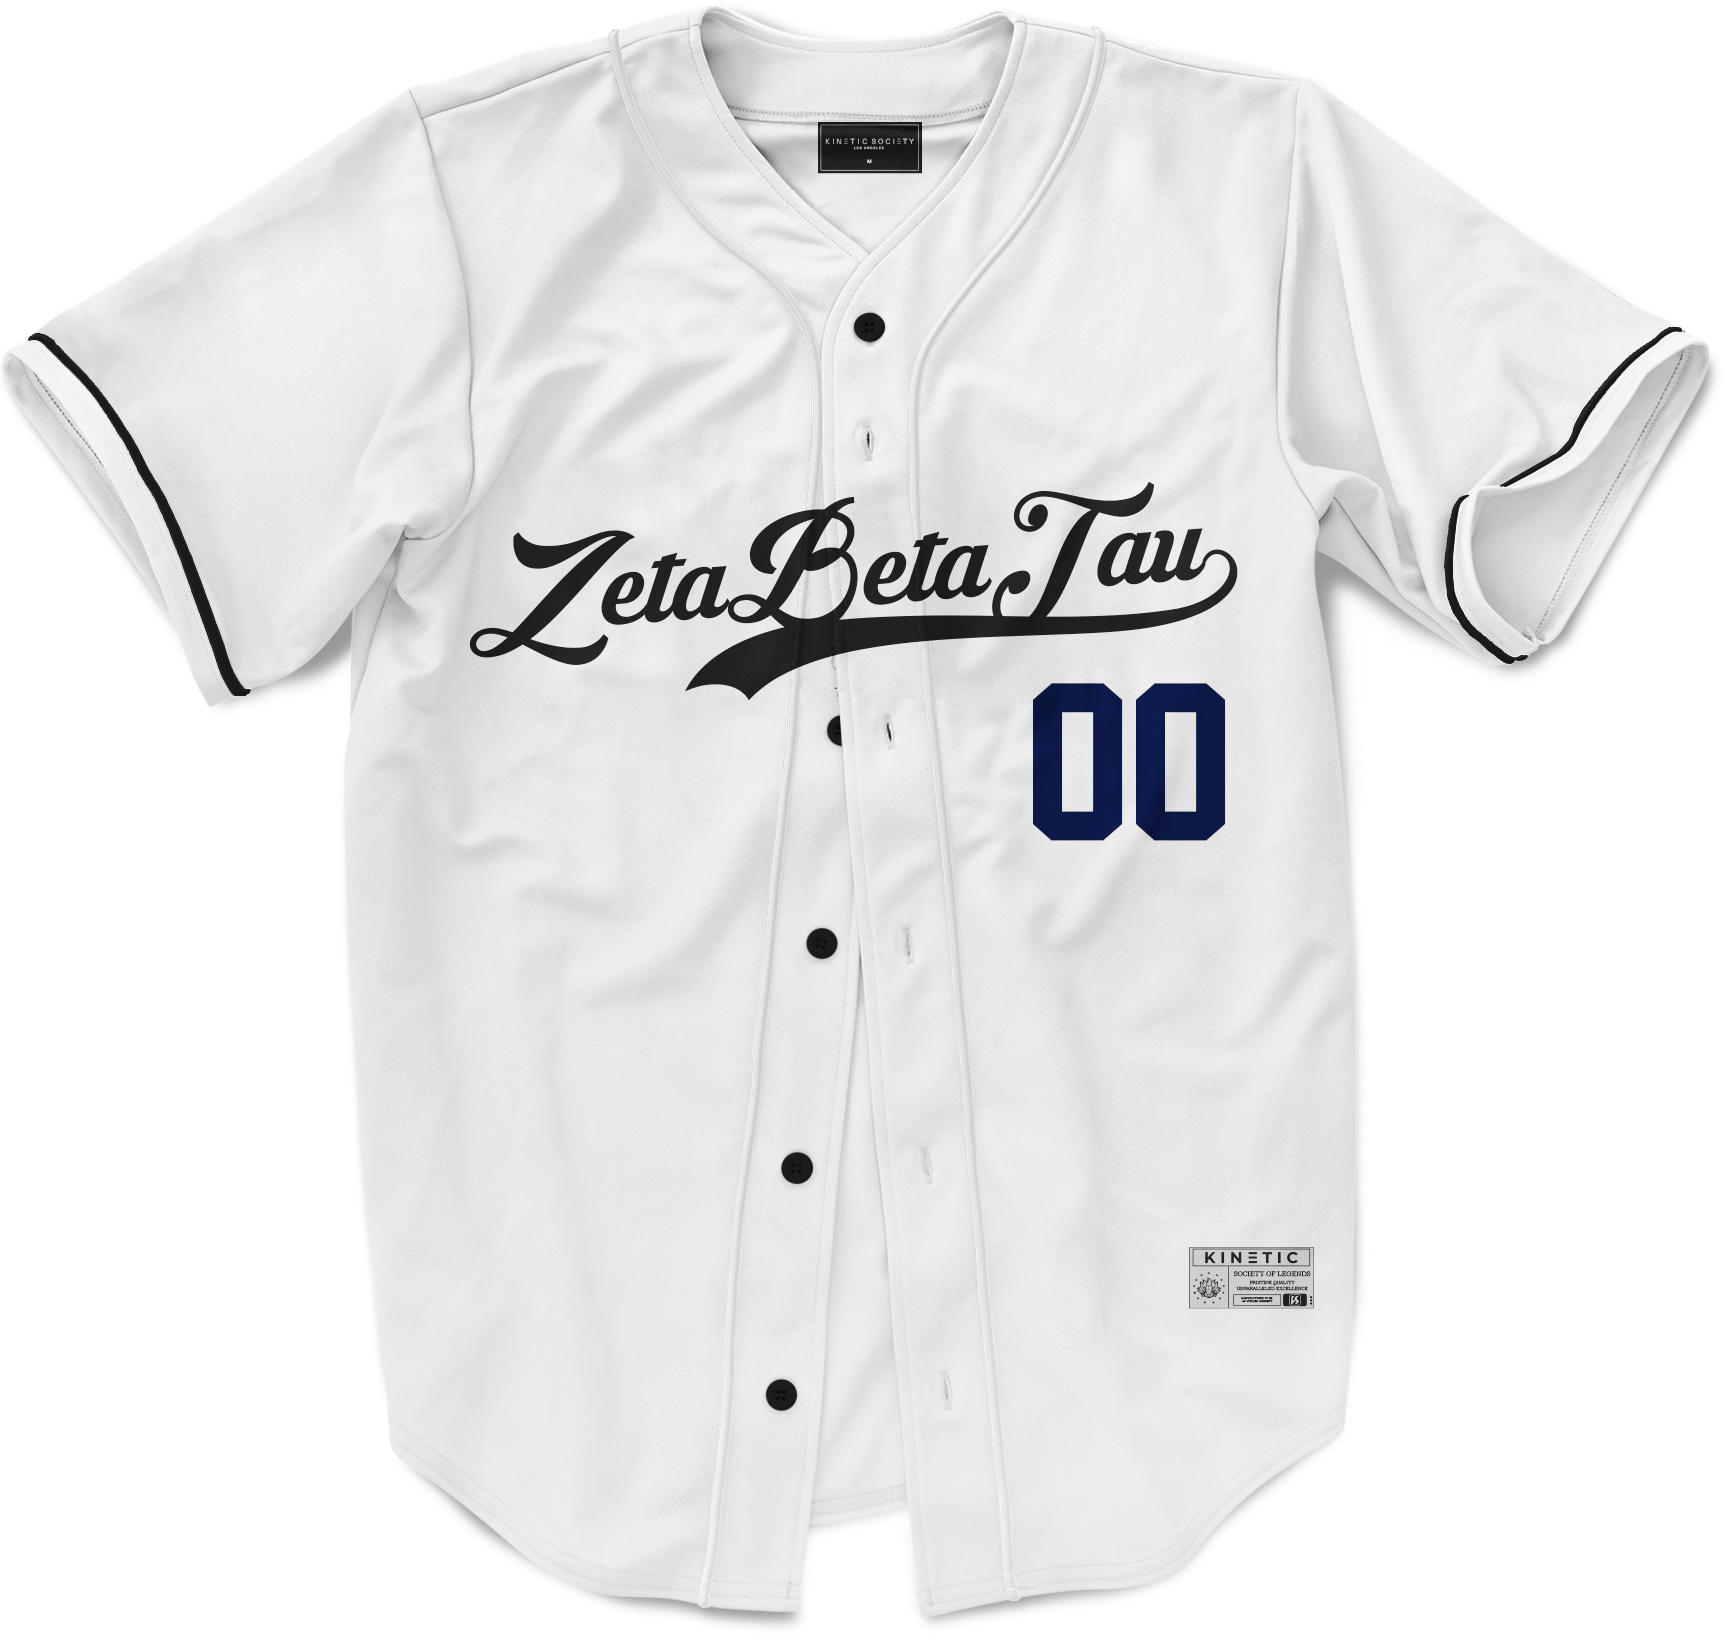 Zeta Beta Tau - Classic Ballpark Blue Baseball Jersey